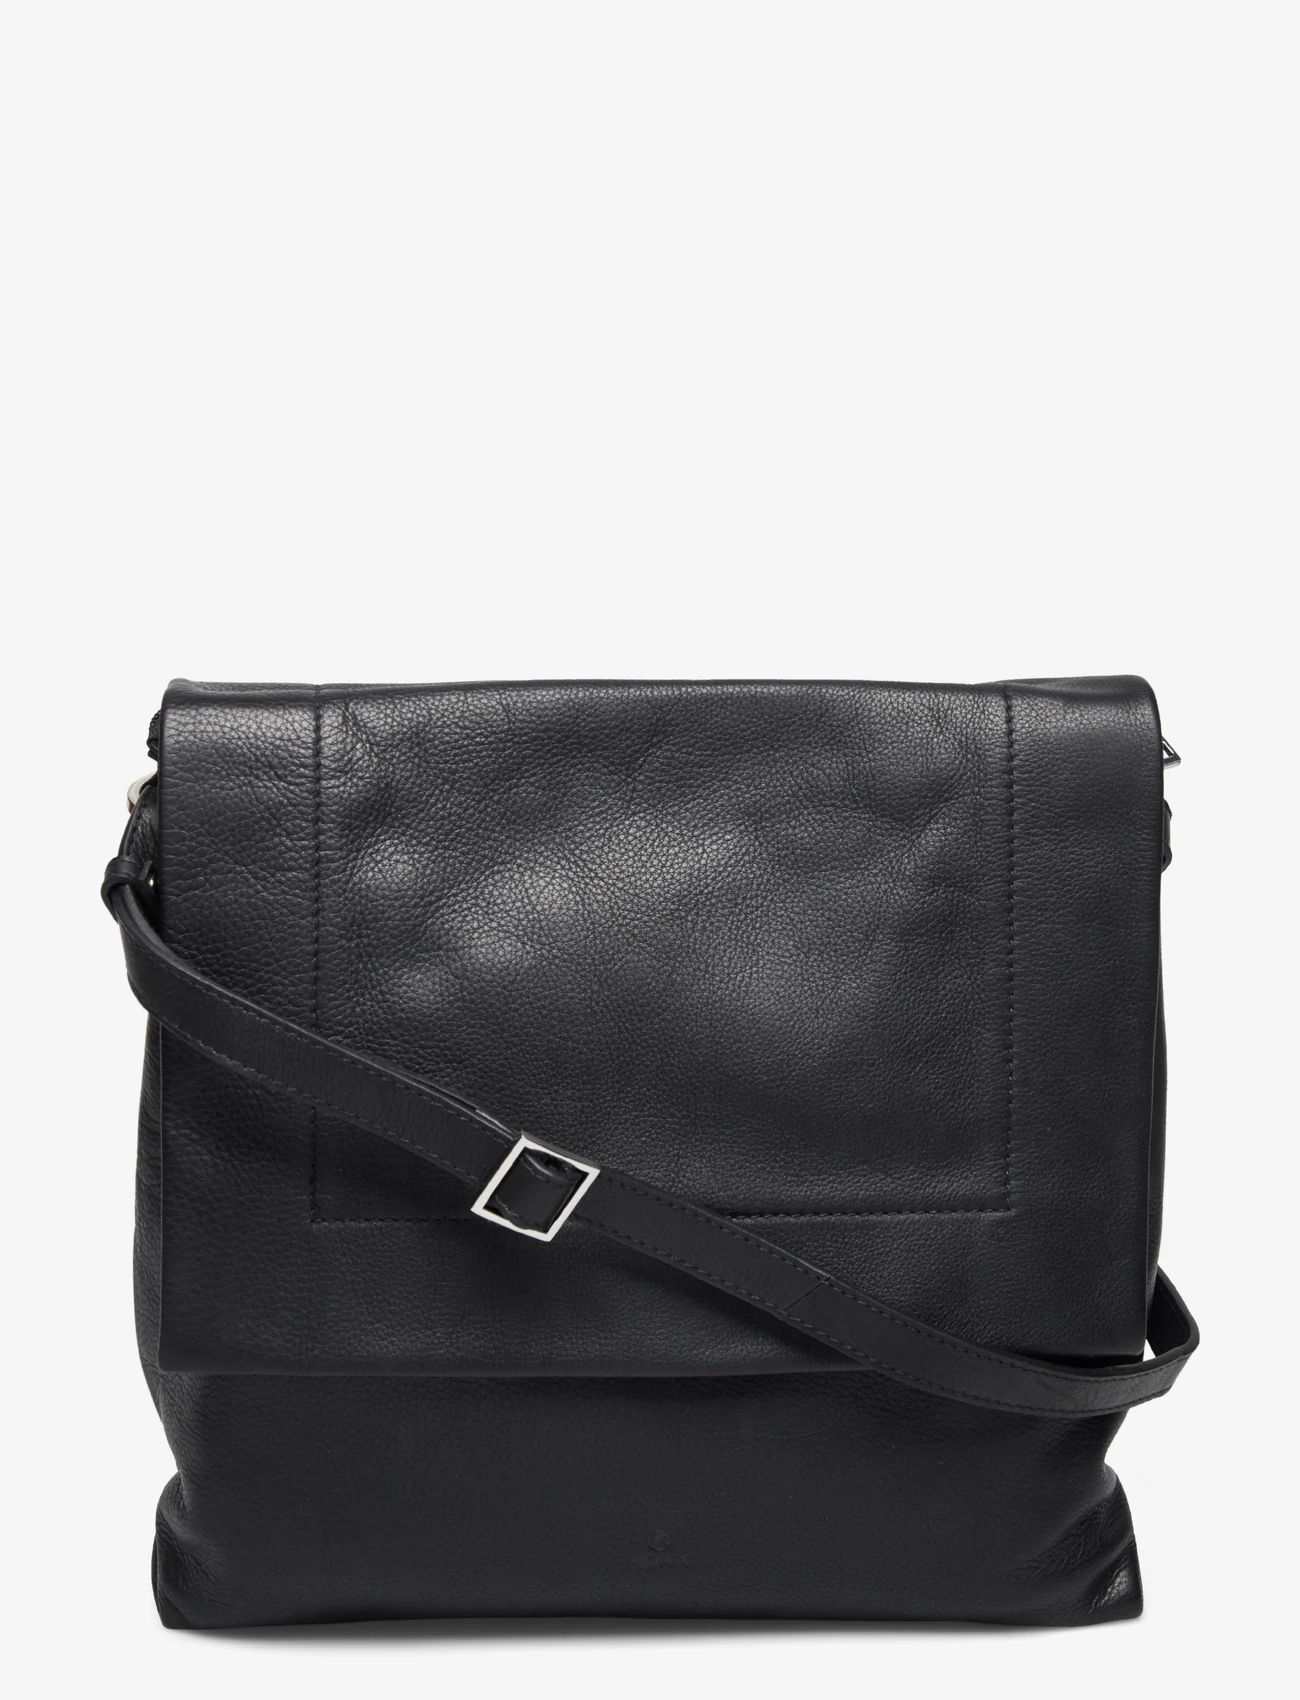 Adax - Venezia shoulder bag Ninna - nordic style - black - 0